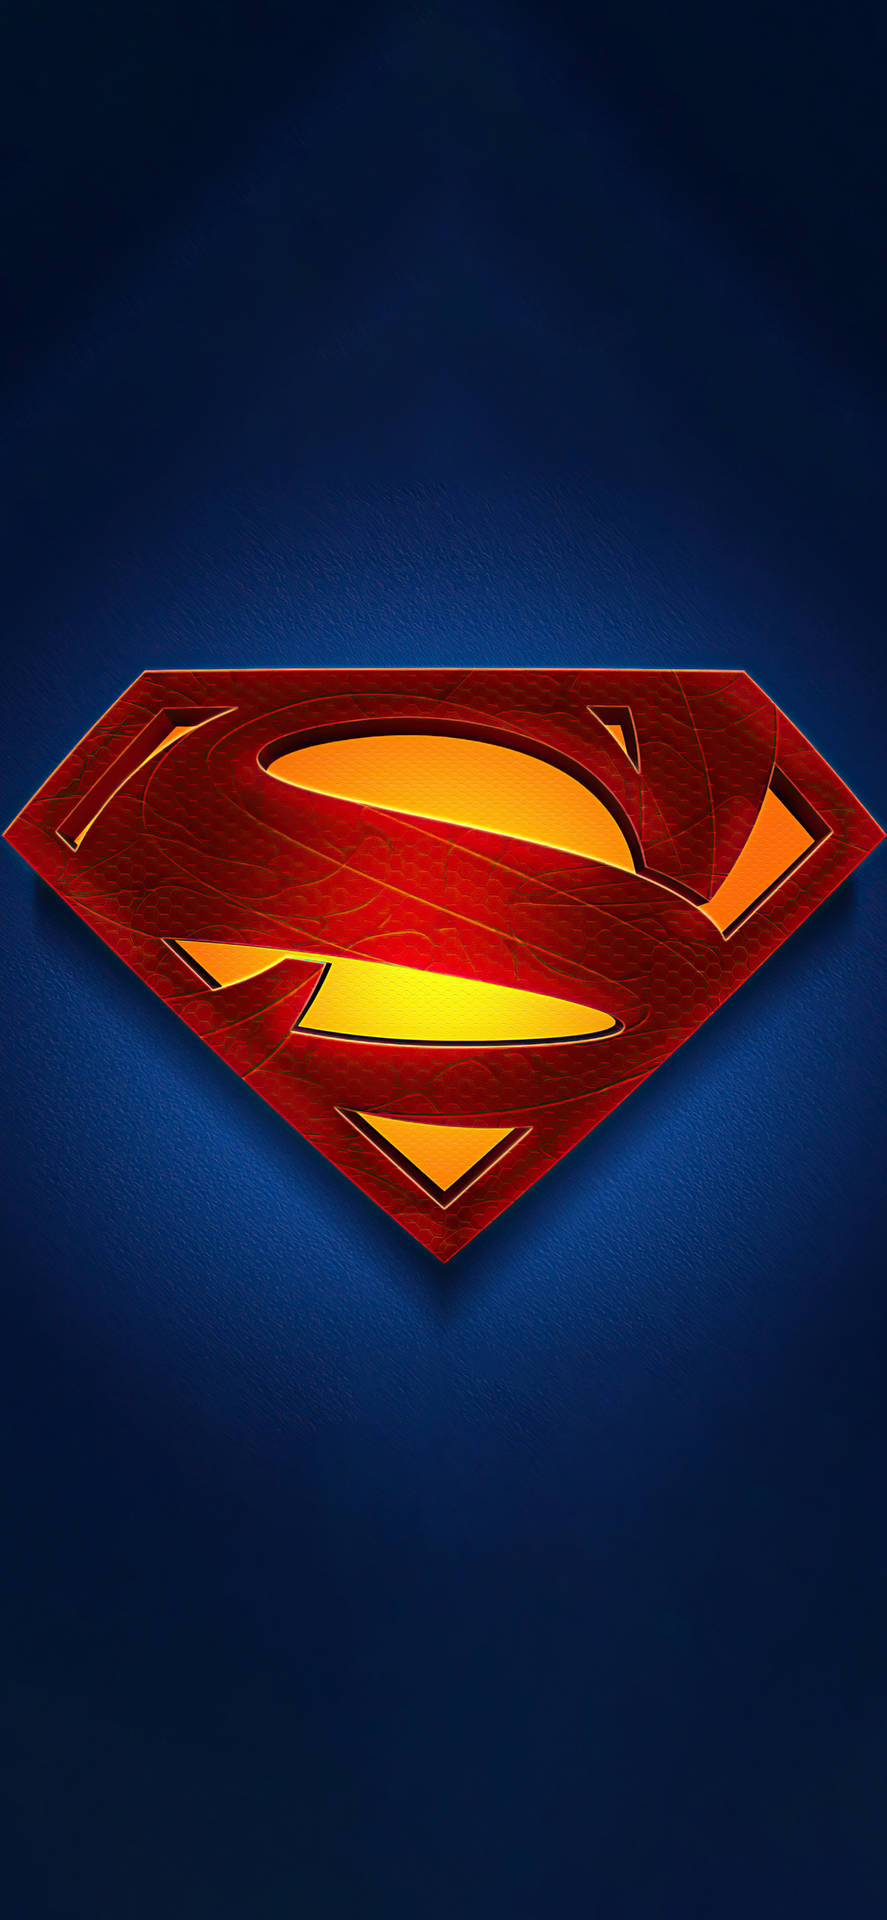 Cool Redesigned Superman Symbol Iphone Wallpaper